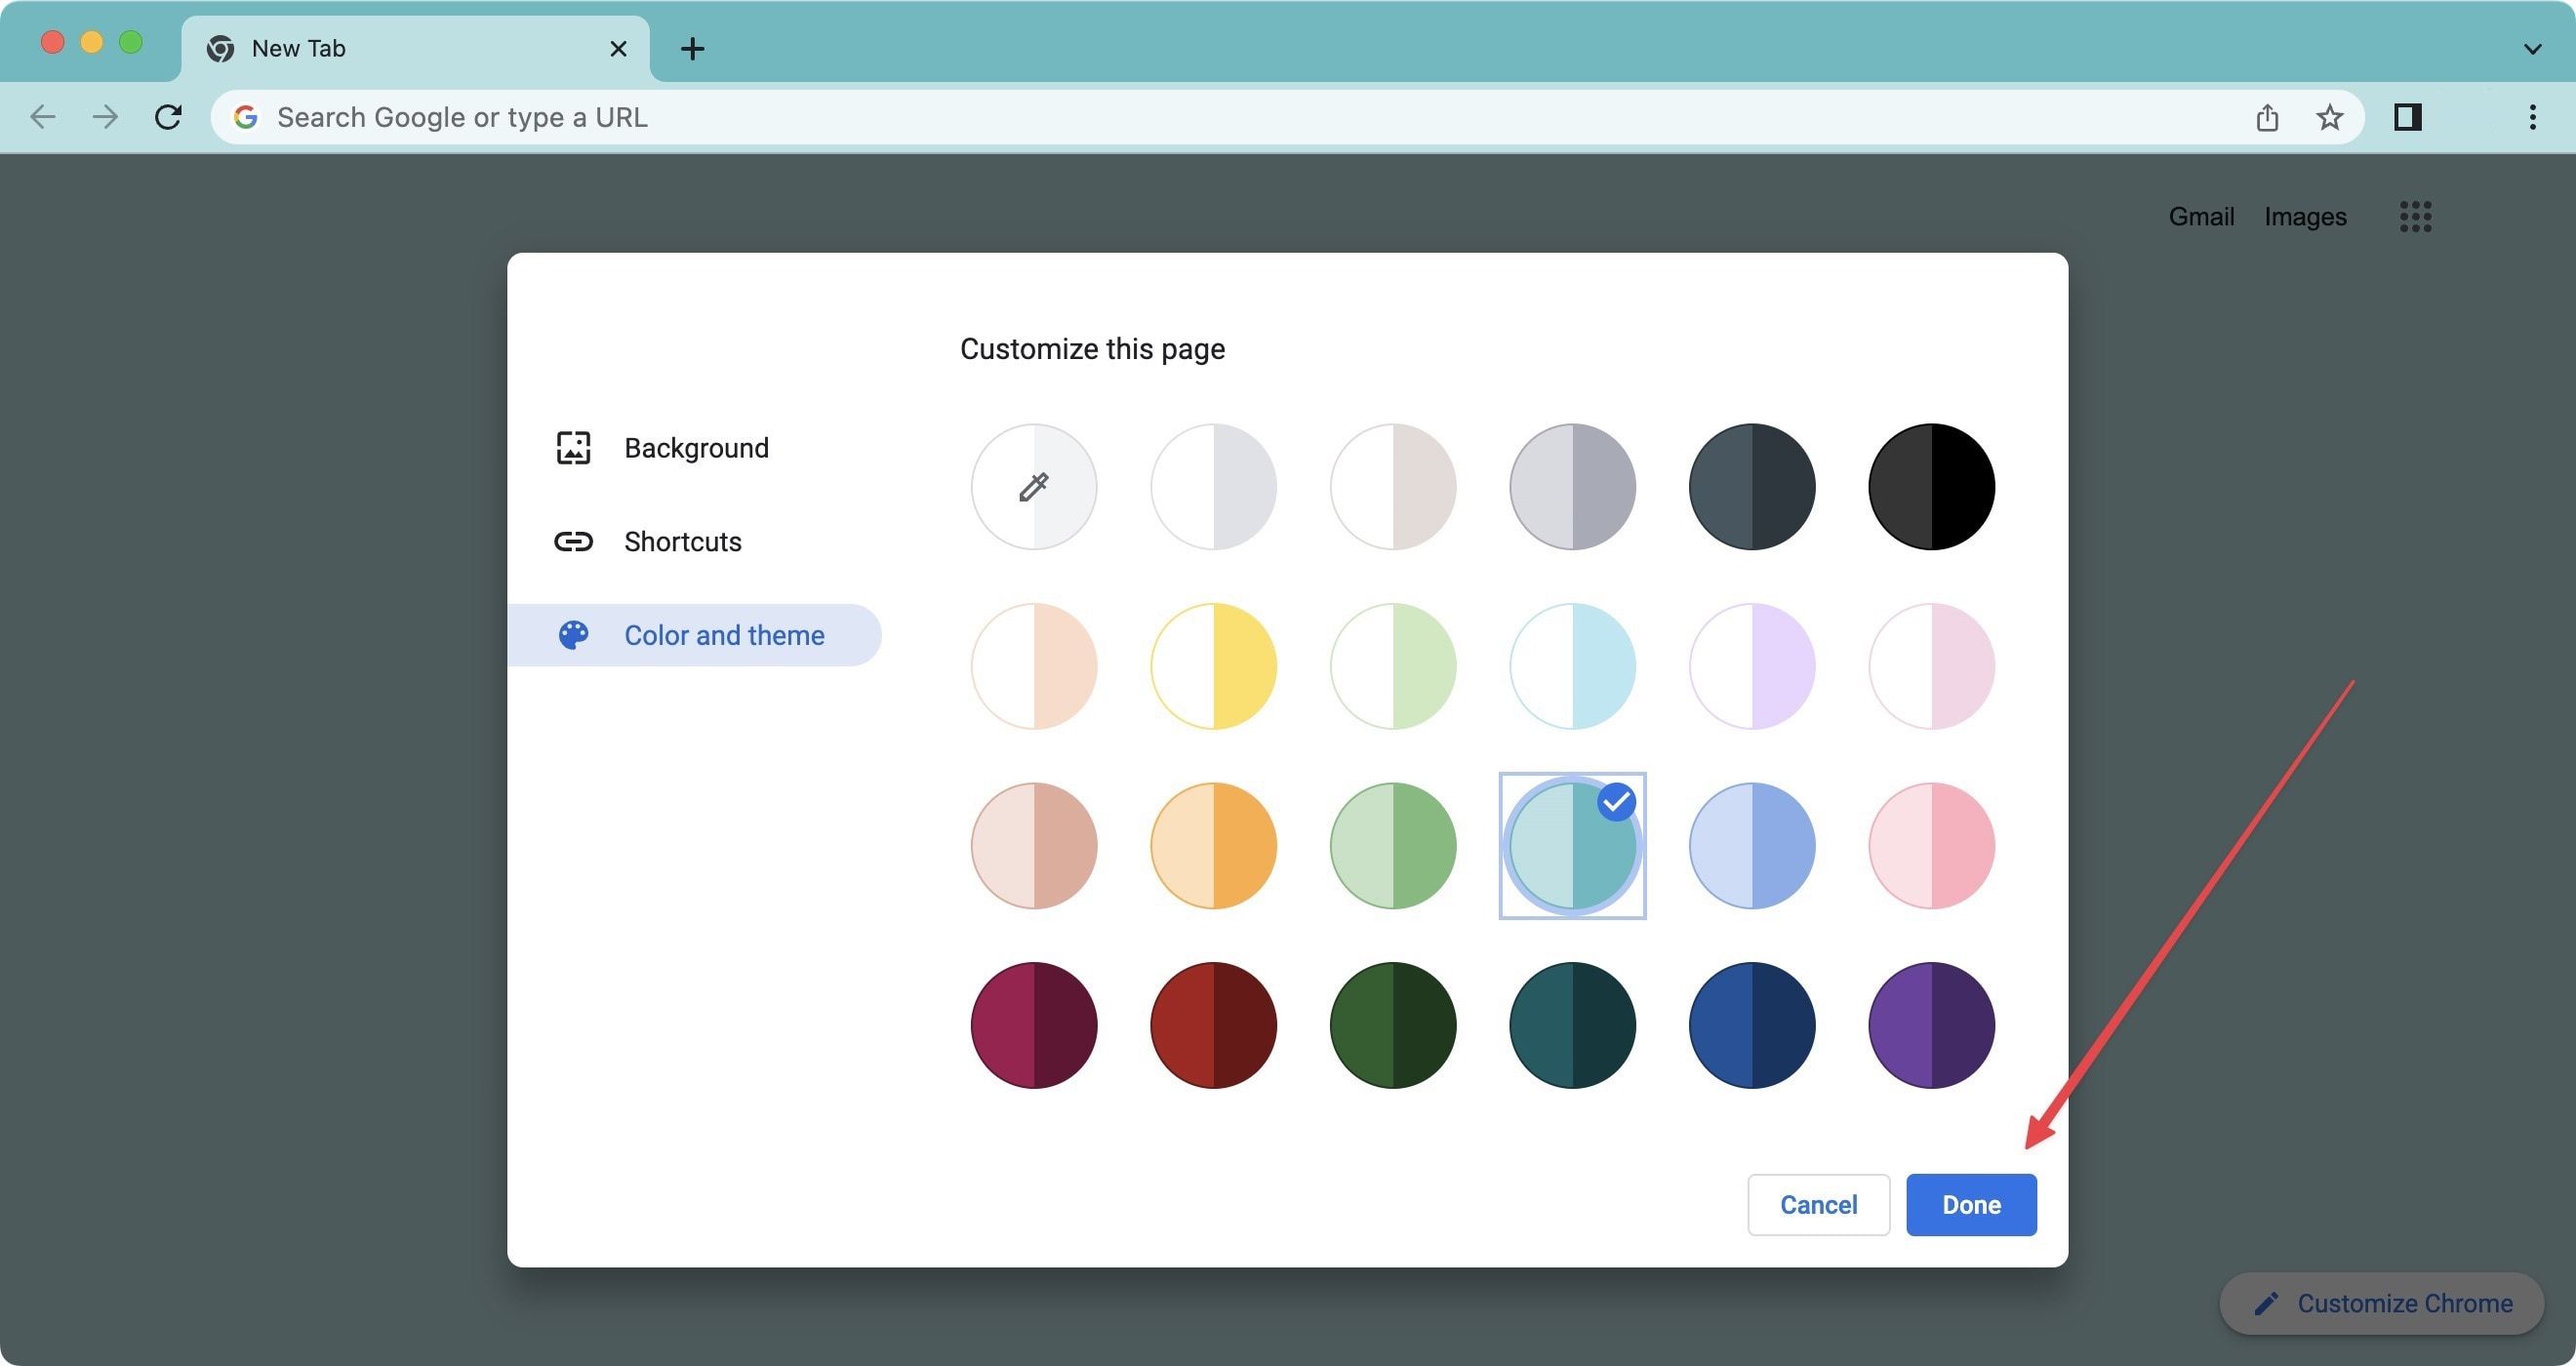 Tangkapan layar Google chrome menunjukkan cara memilih tema warna